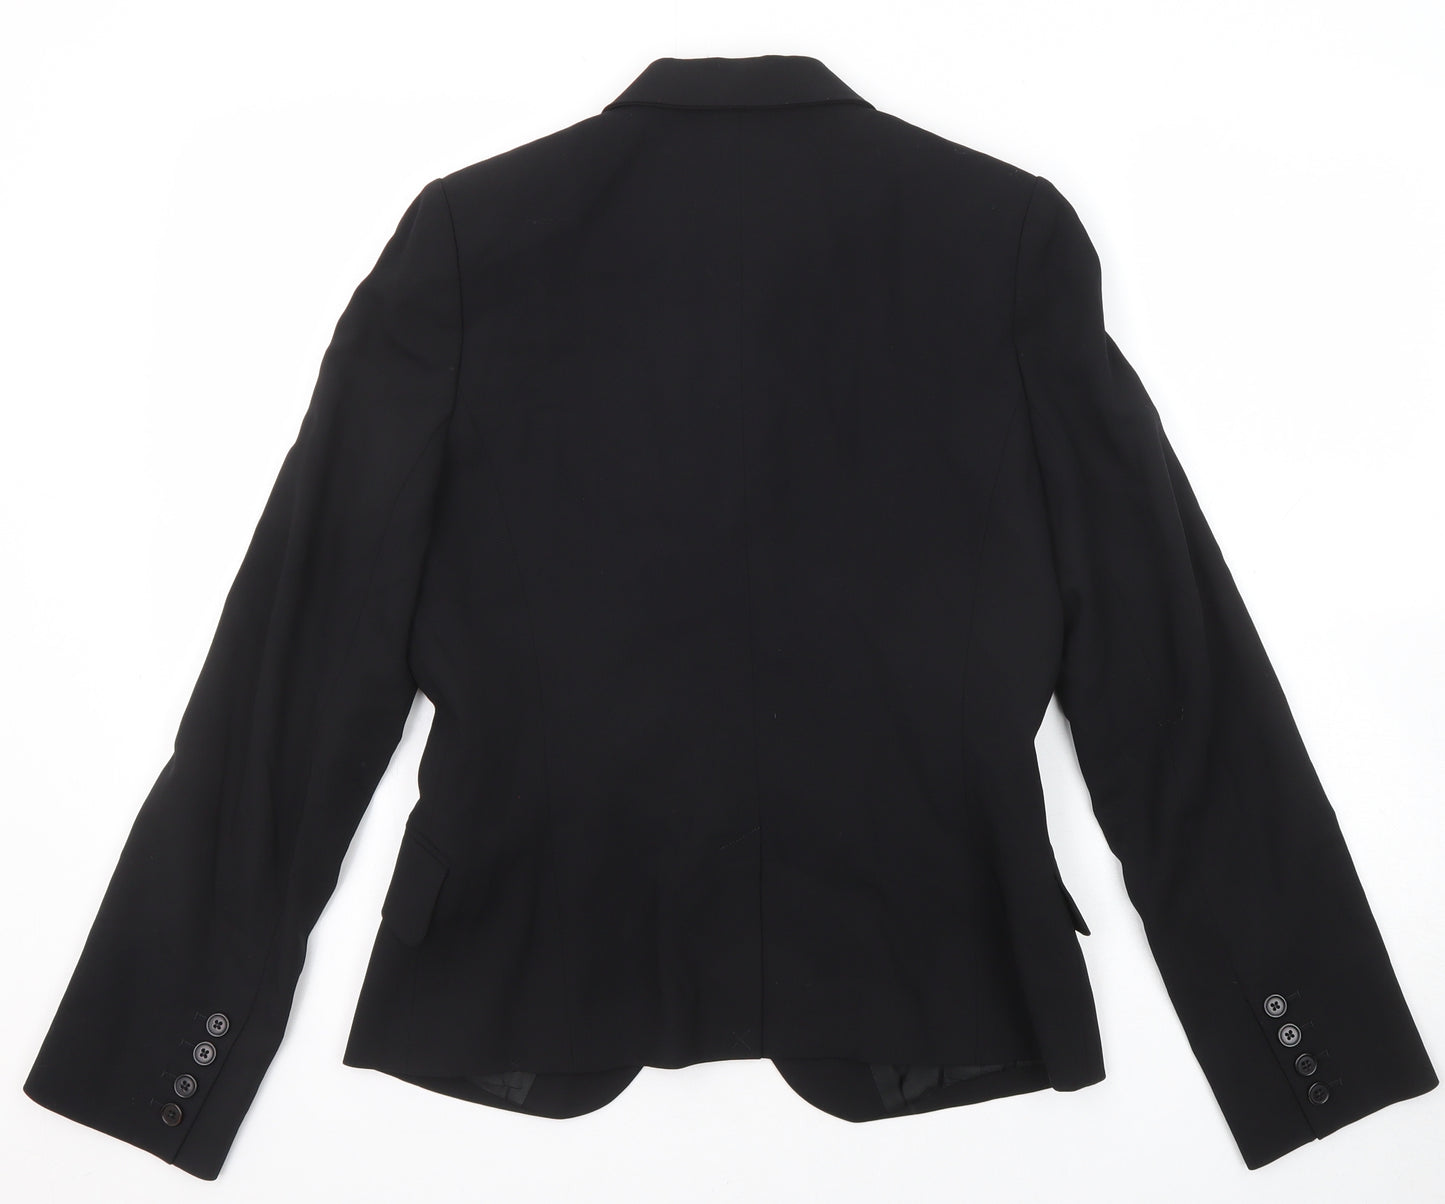 T.M.Lewin Womens Black Wool Jacket Suit Jacket Size 10